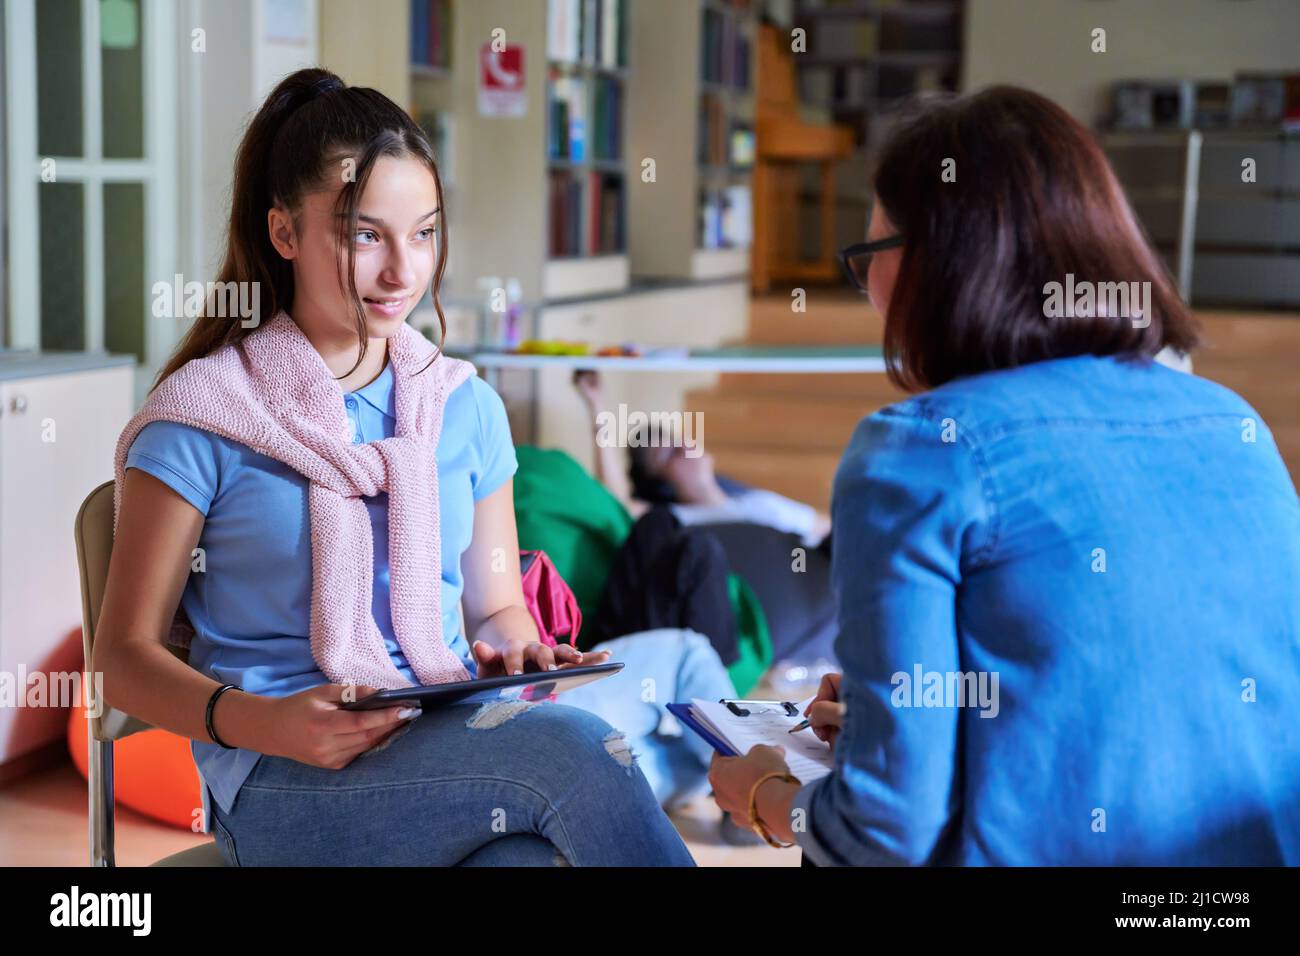 Woman school psychologist teacher talking and helping student, girl teenager Stock Photo